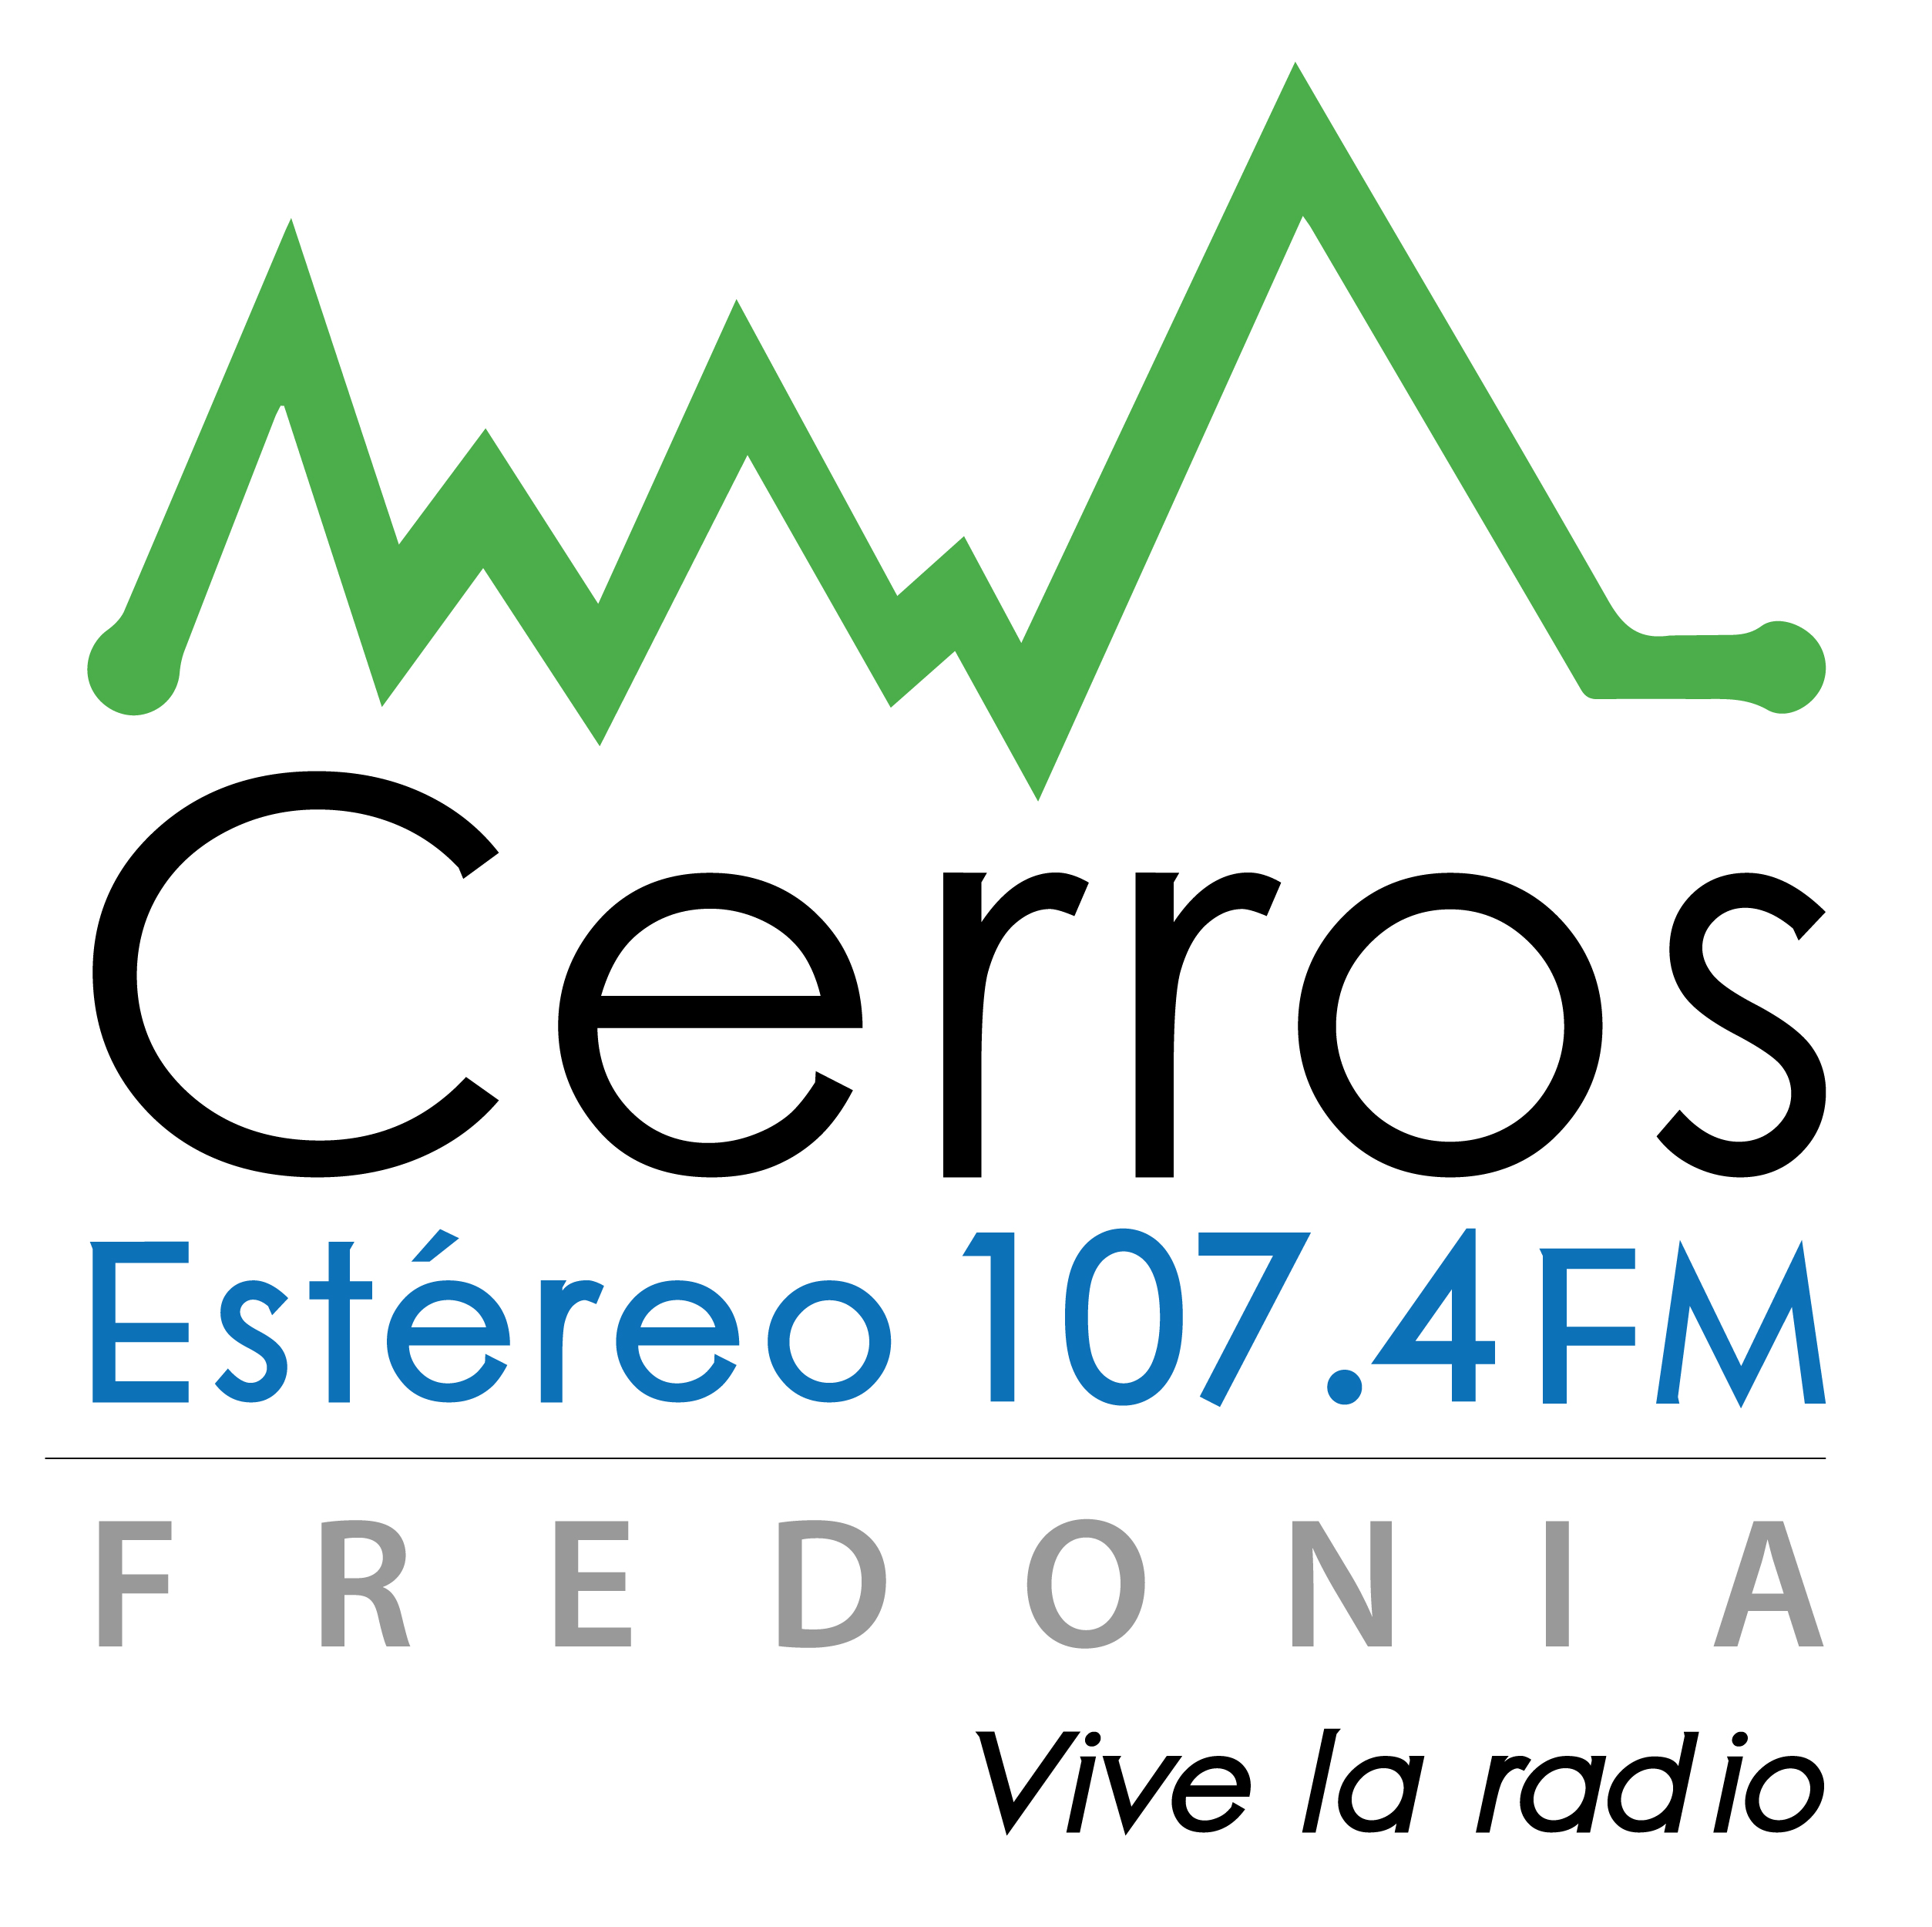 Cerros Stereo 107-4 FM